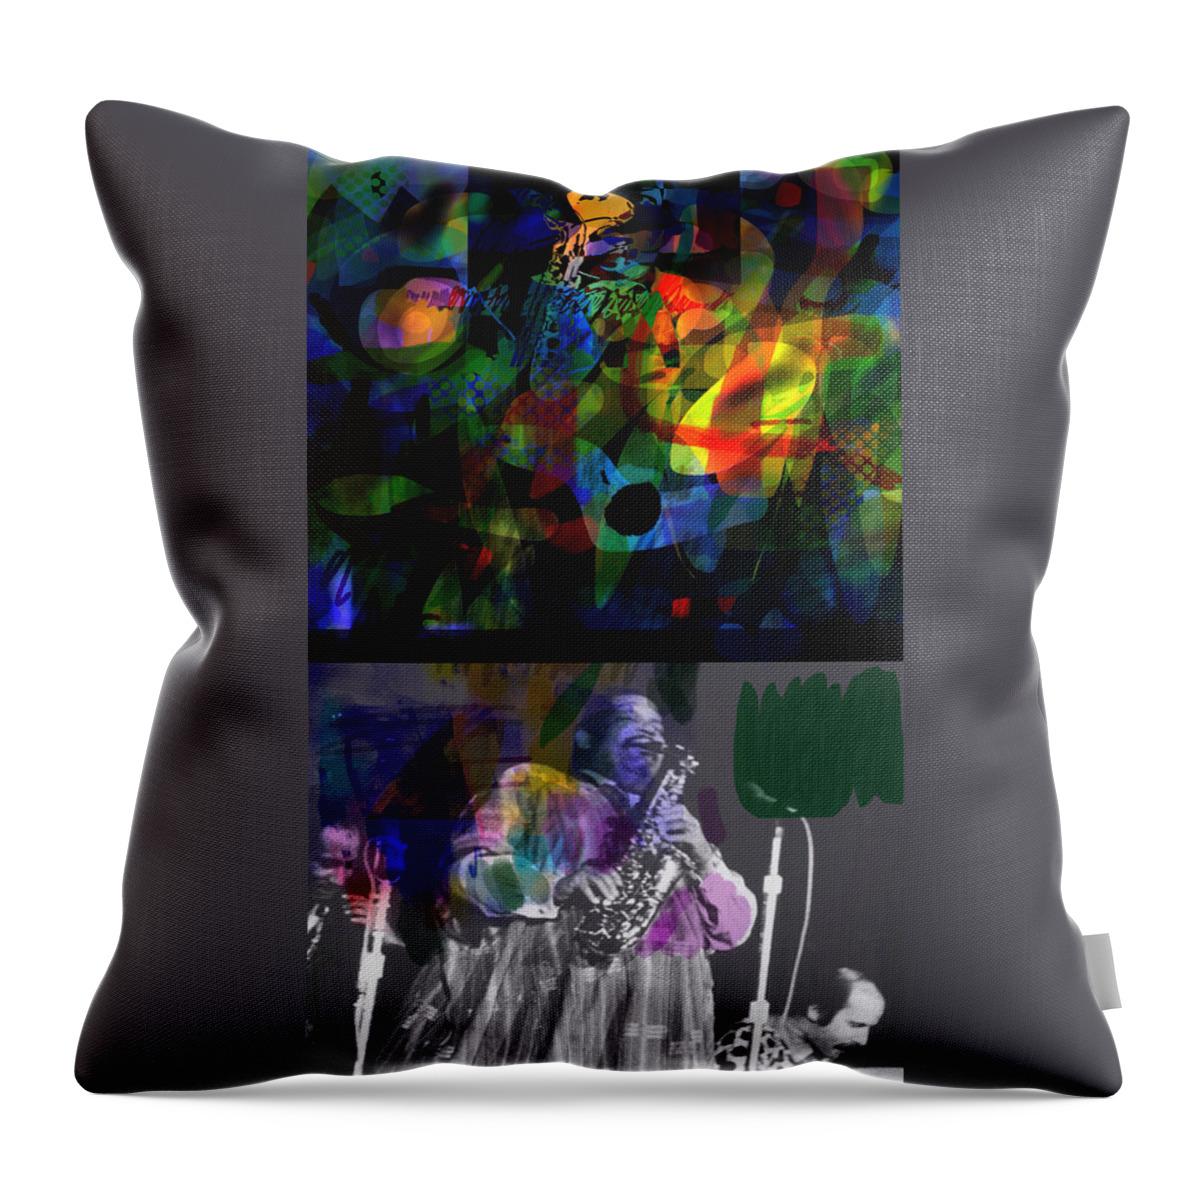 Cannonball Throw Pillow featuring the digital art Cannonball by Joe Roache